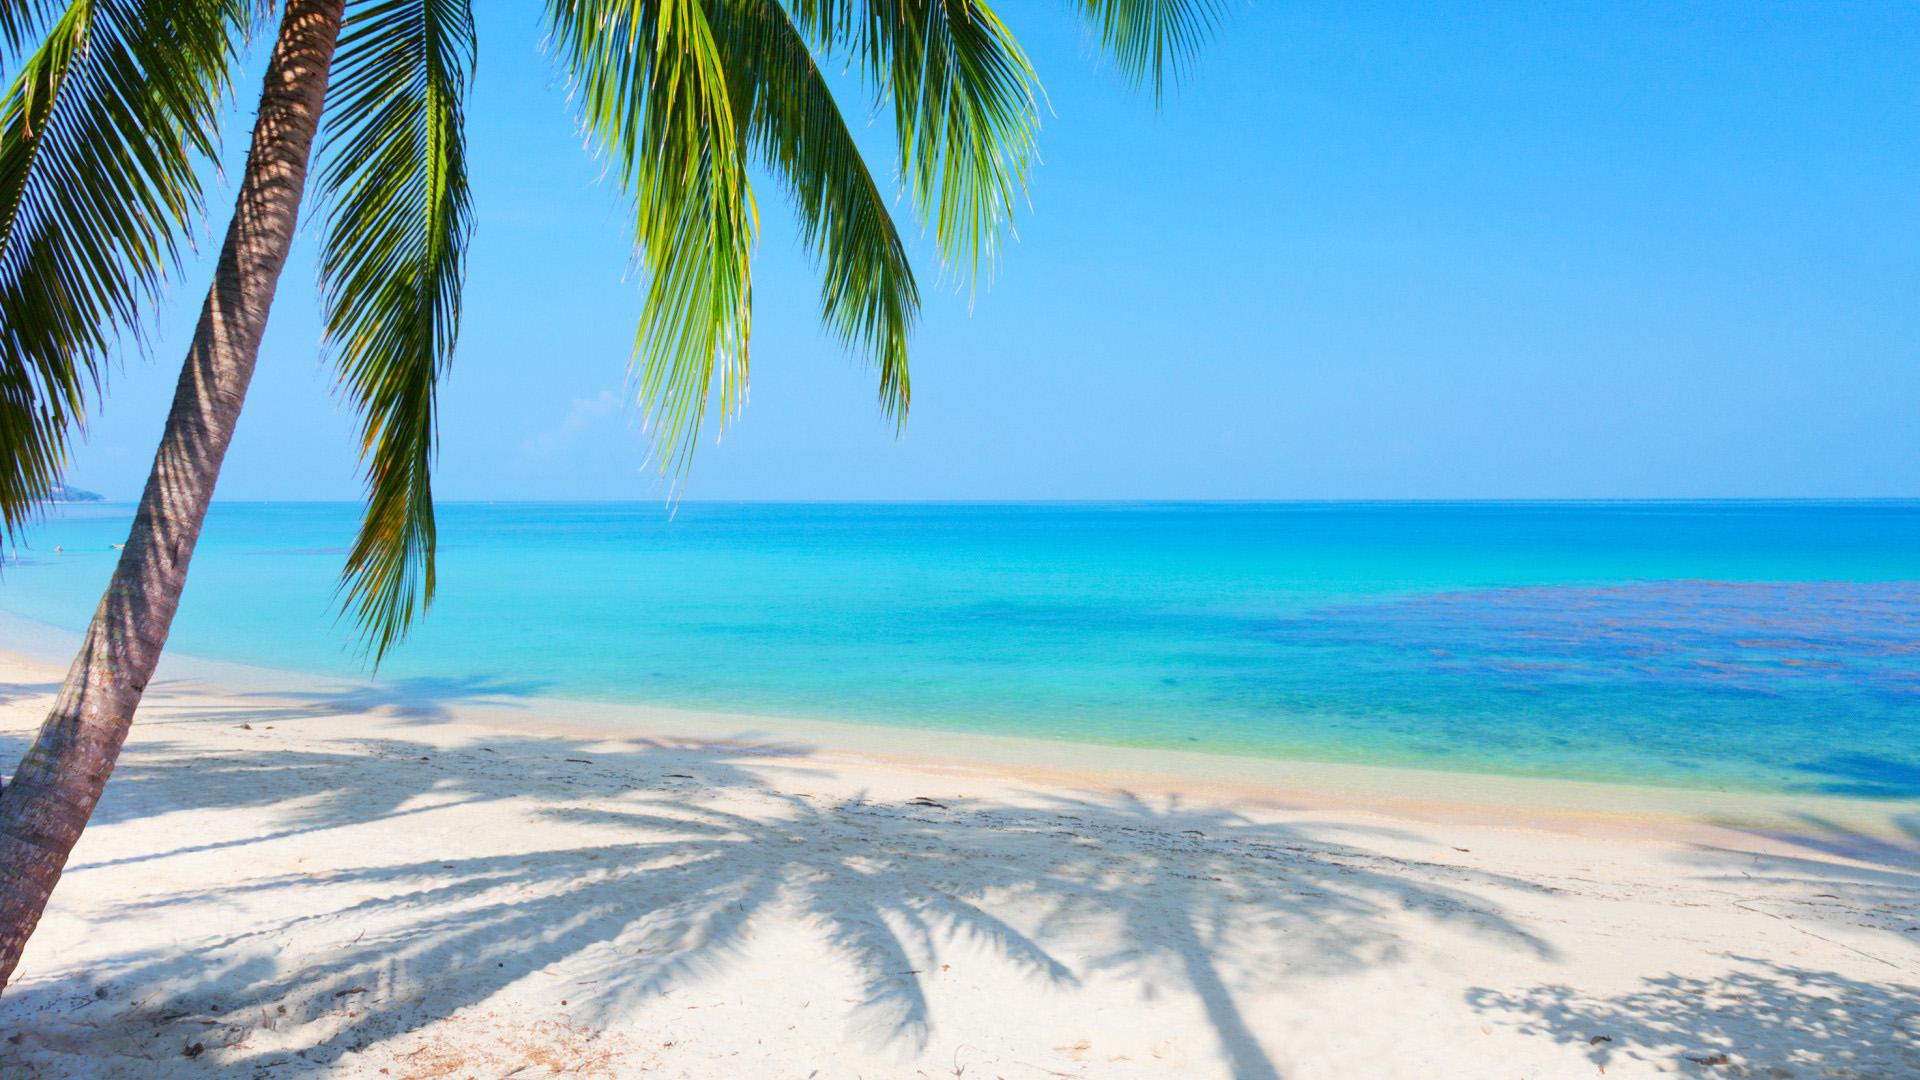 Scenery, sea, palm trees, reflected, beach, desktop wallpaper | beach